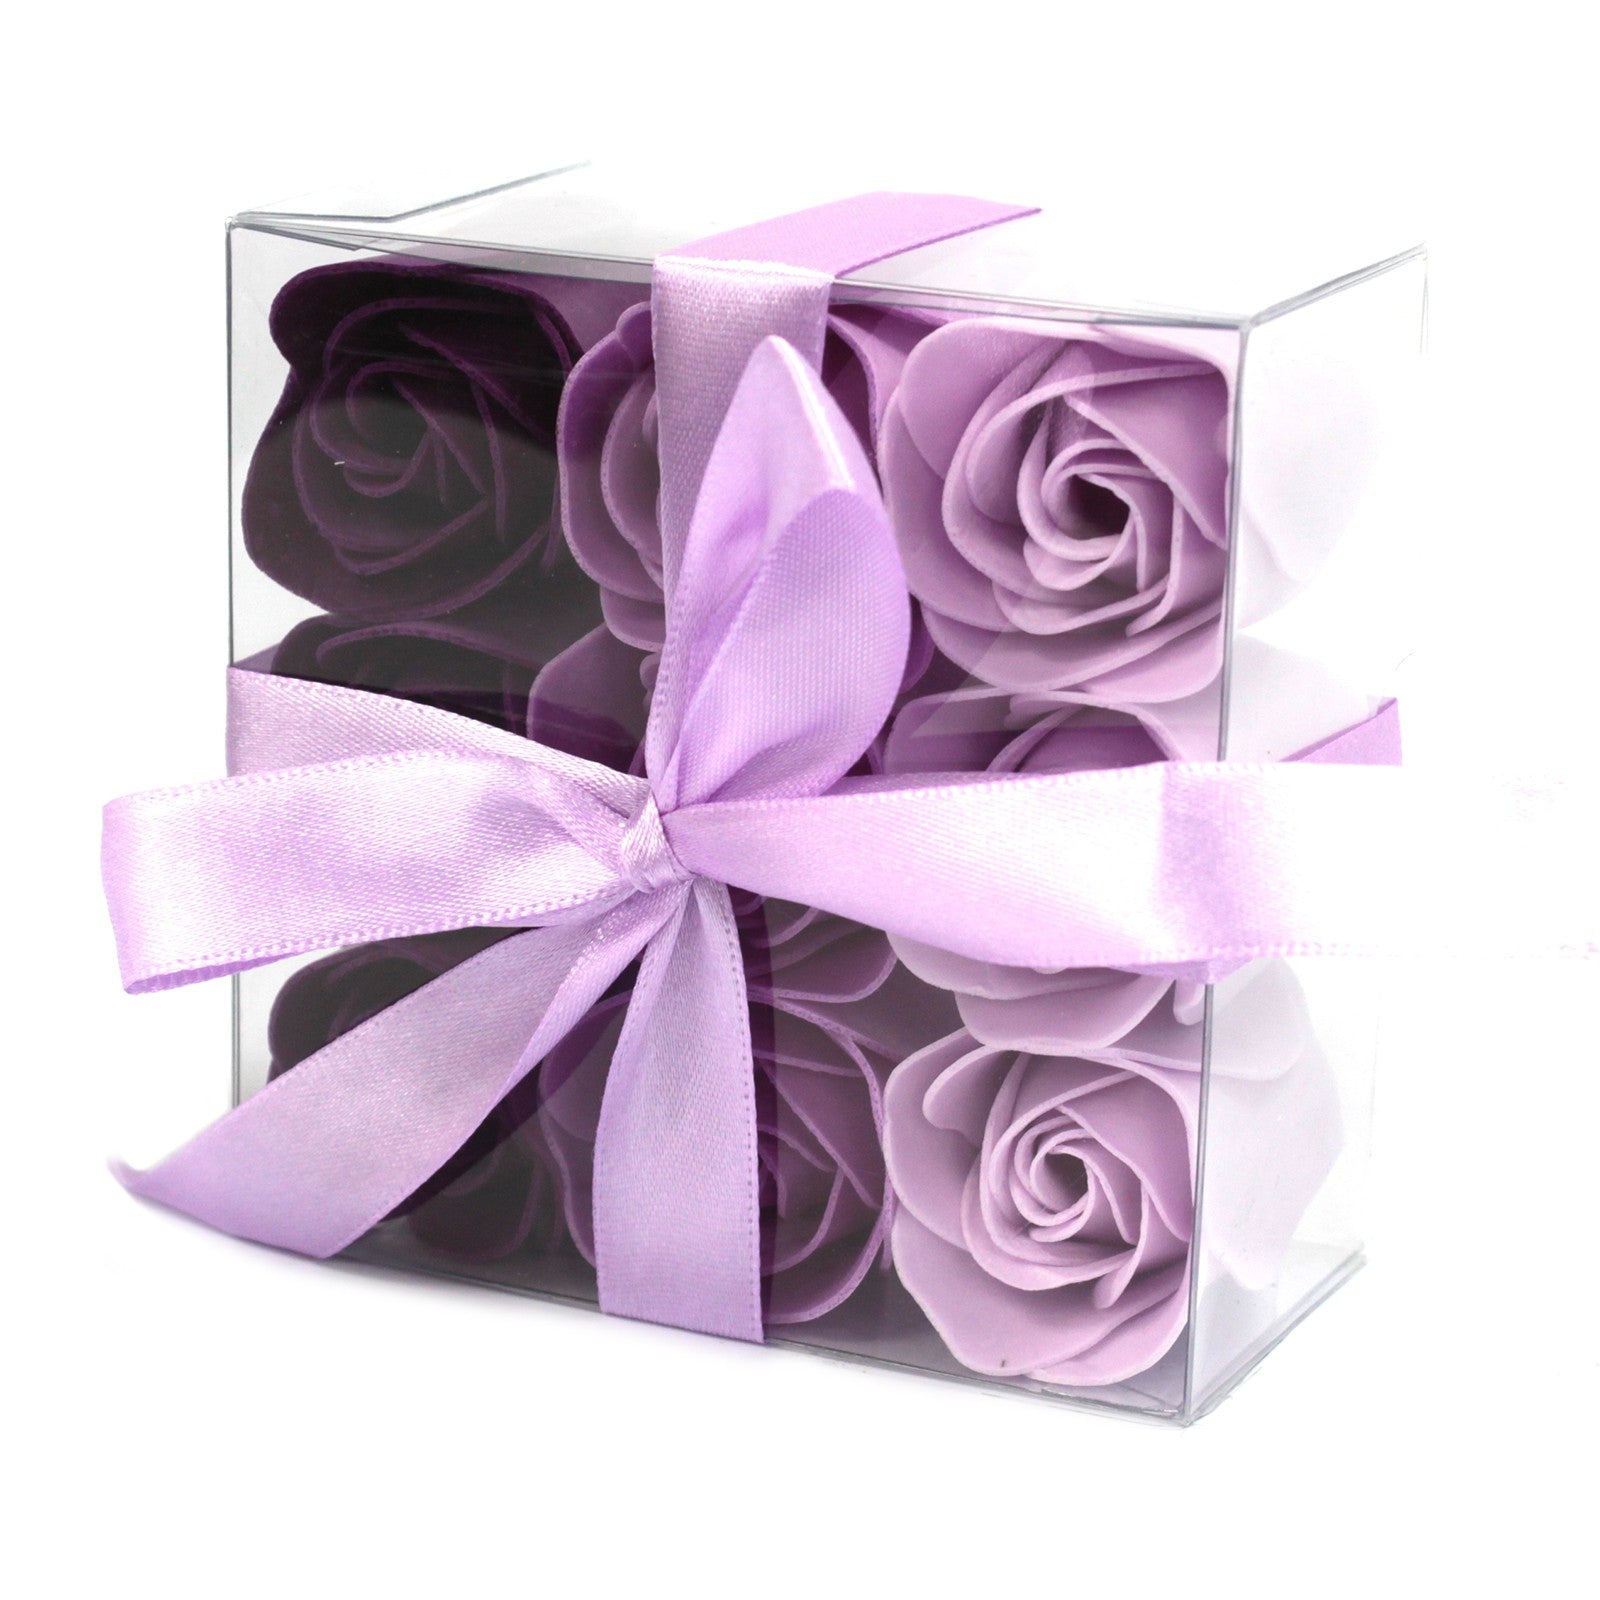 View Set of 9 Soap Flower Lavender Roses information